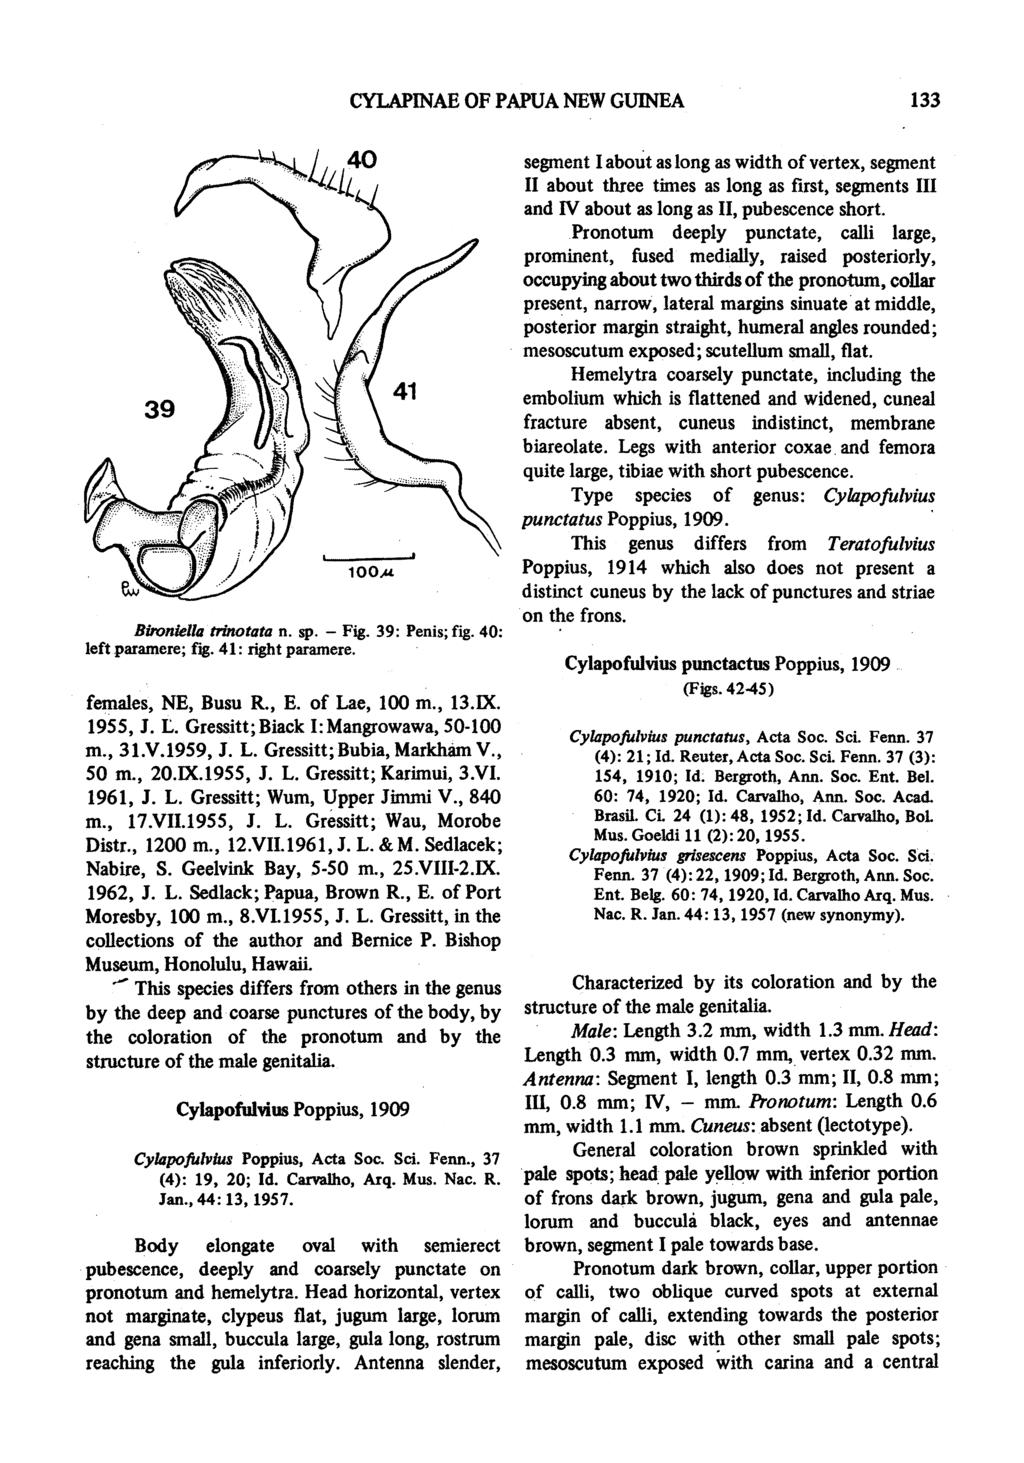 CYLAPINAE OF PAPUA NEW GUINEA 133 Bironiella trnotata n. sp. - Fig. 39: Penis; fig. 40: left paramere; fig. 41: right paraxmere. females, NE, Busu R., E. of Lae, 100 m., 13.IX. 1955, J. L. Gressitt; Biack I: Mangrowawa, 50-100 m.